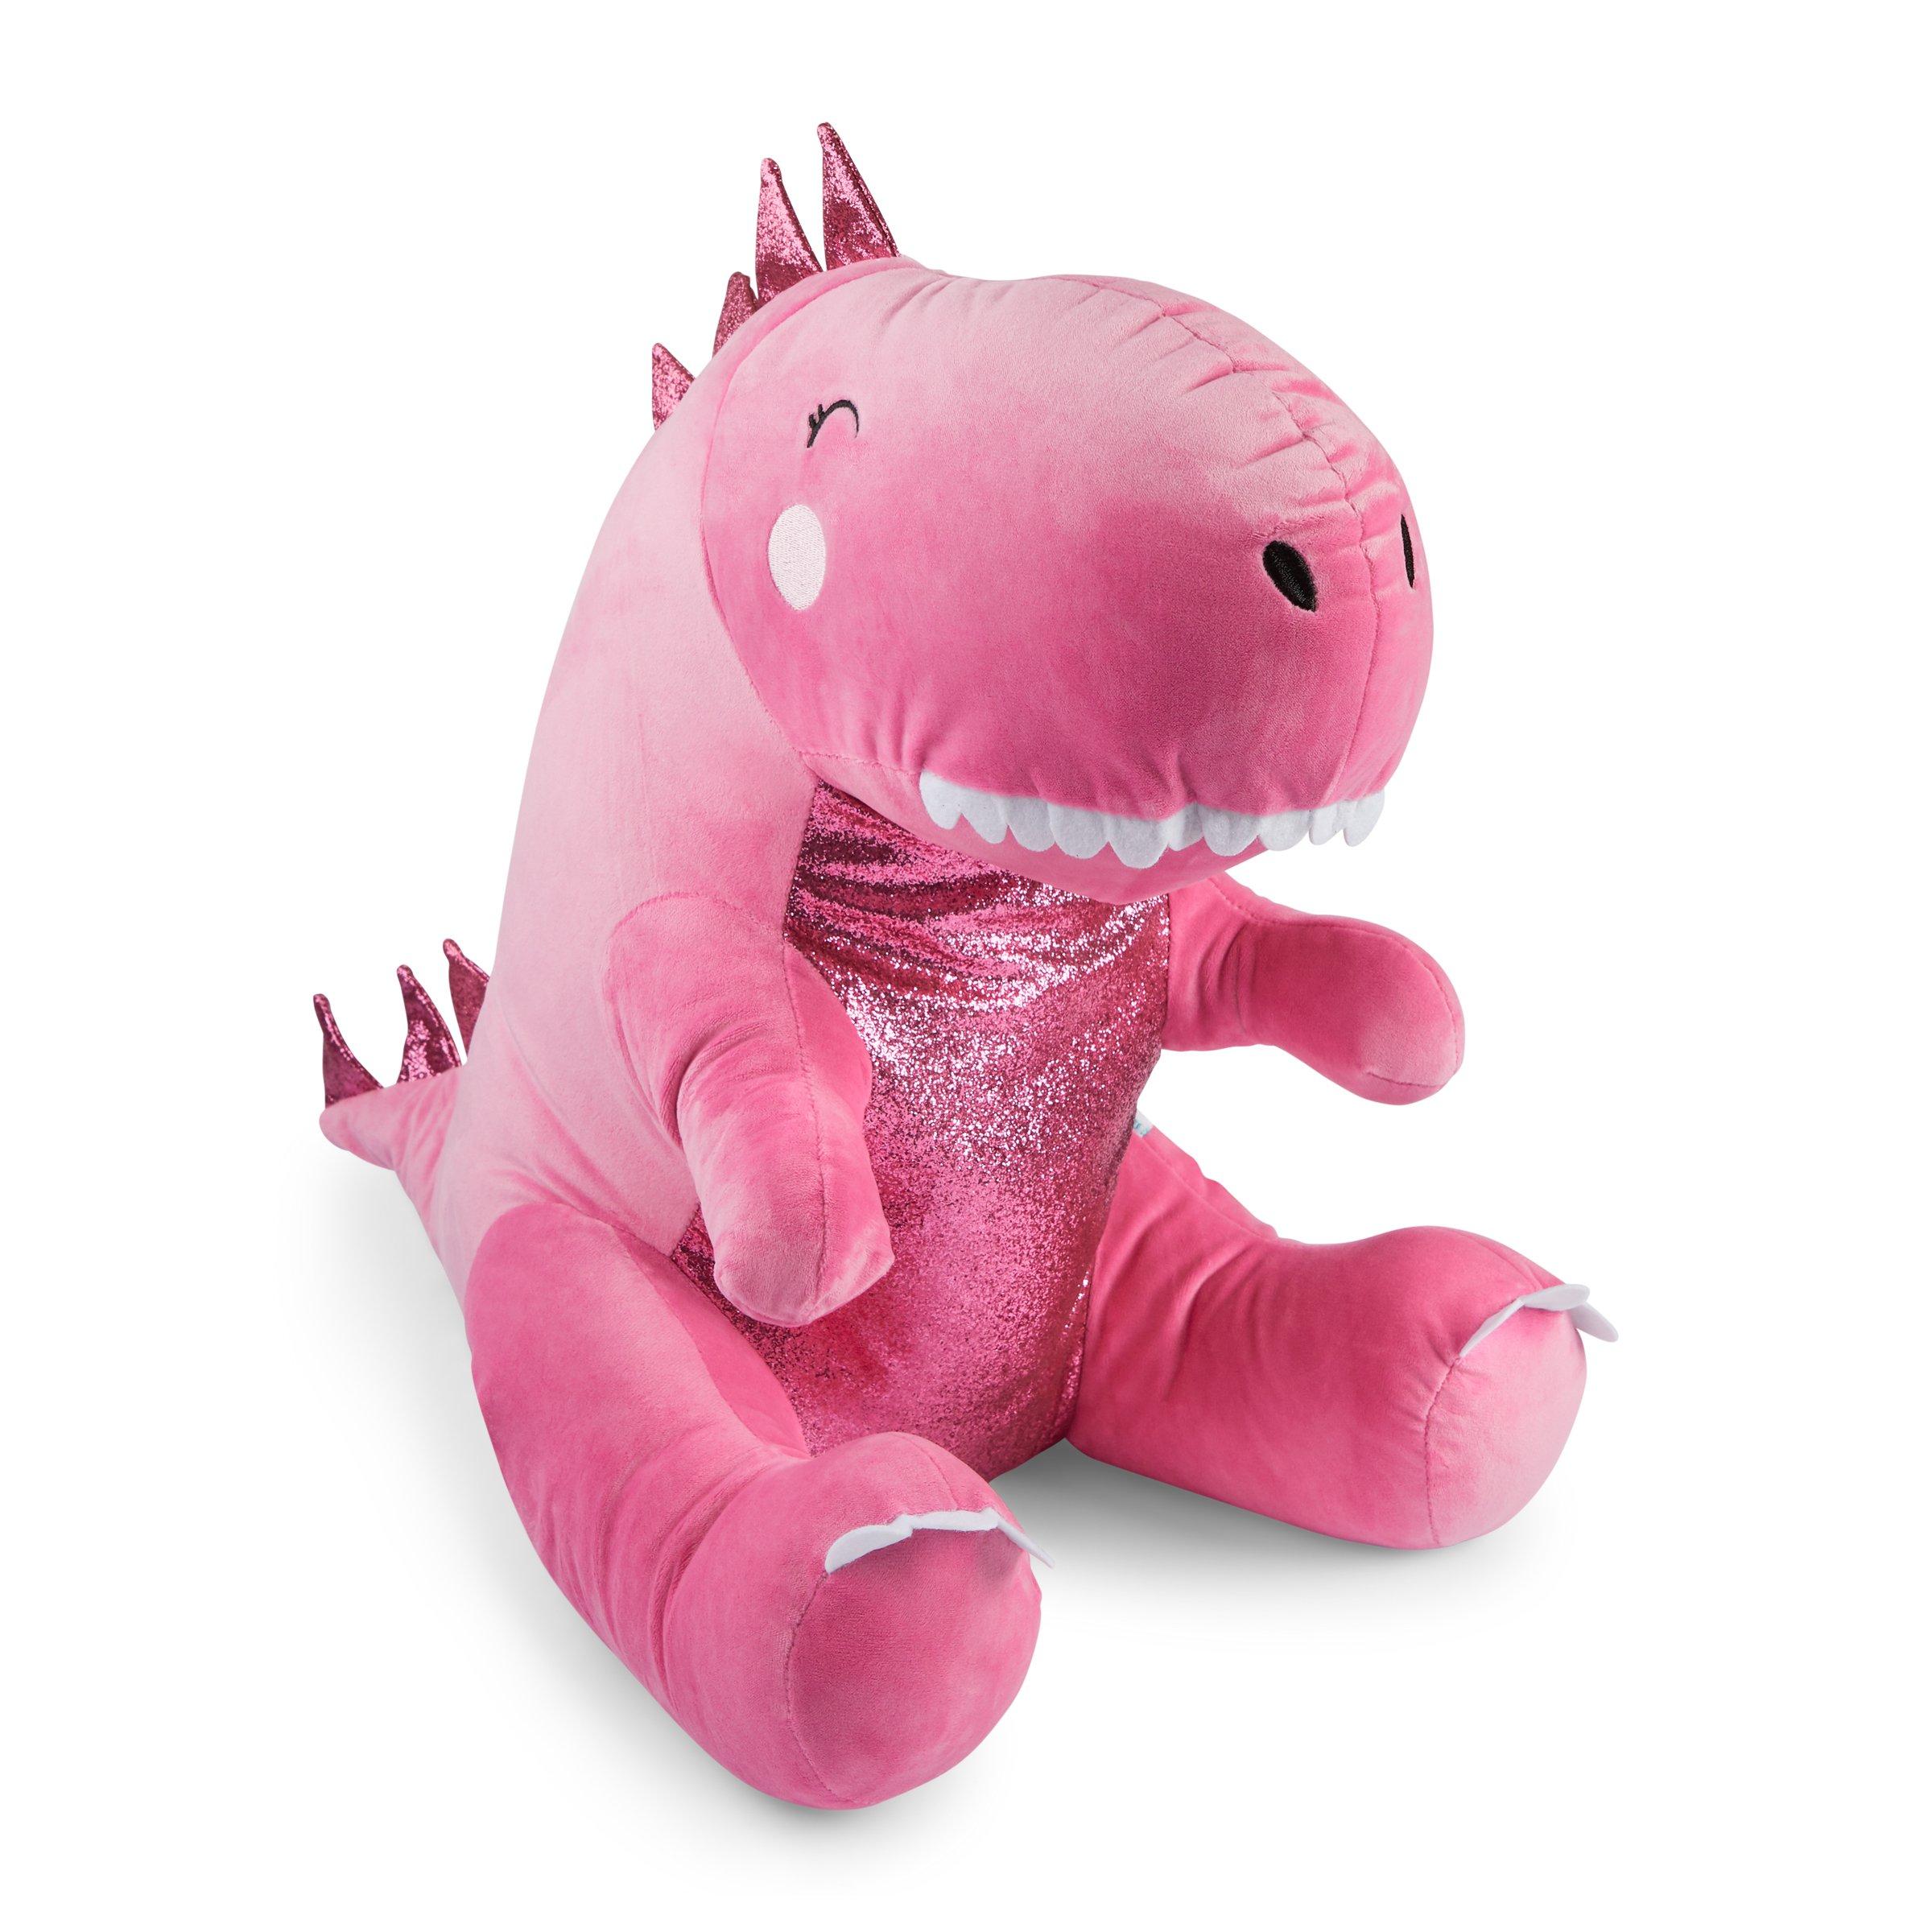 Dinosaur Plush Toy Soft Stuffed Animal Dino Plushies Doll, 46% OFF